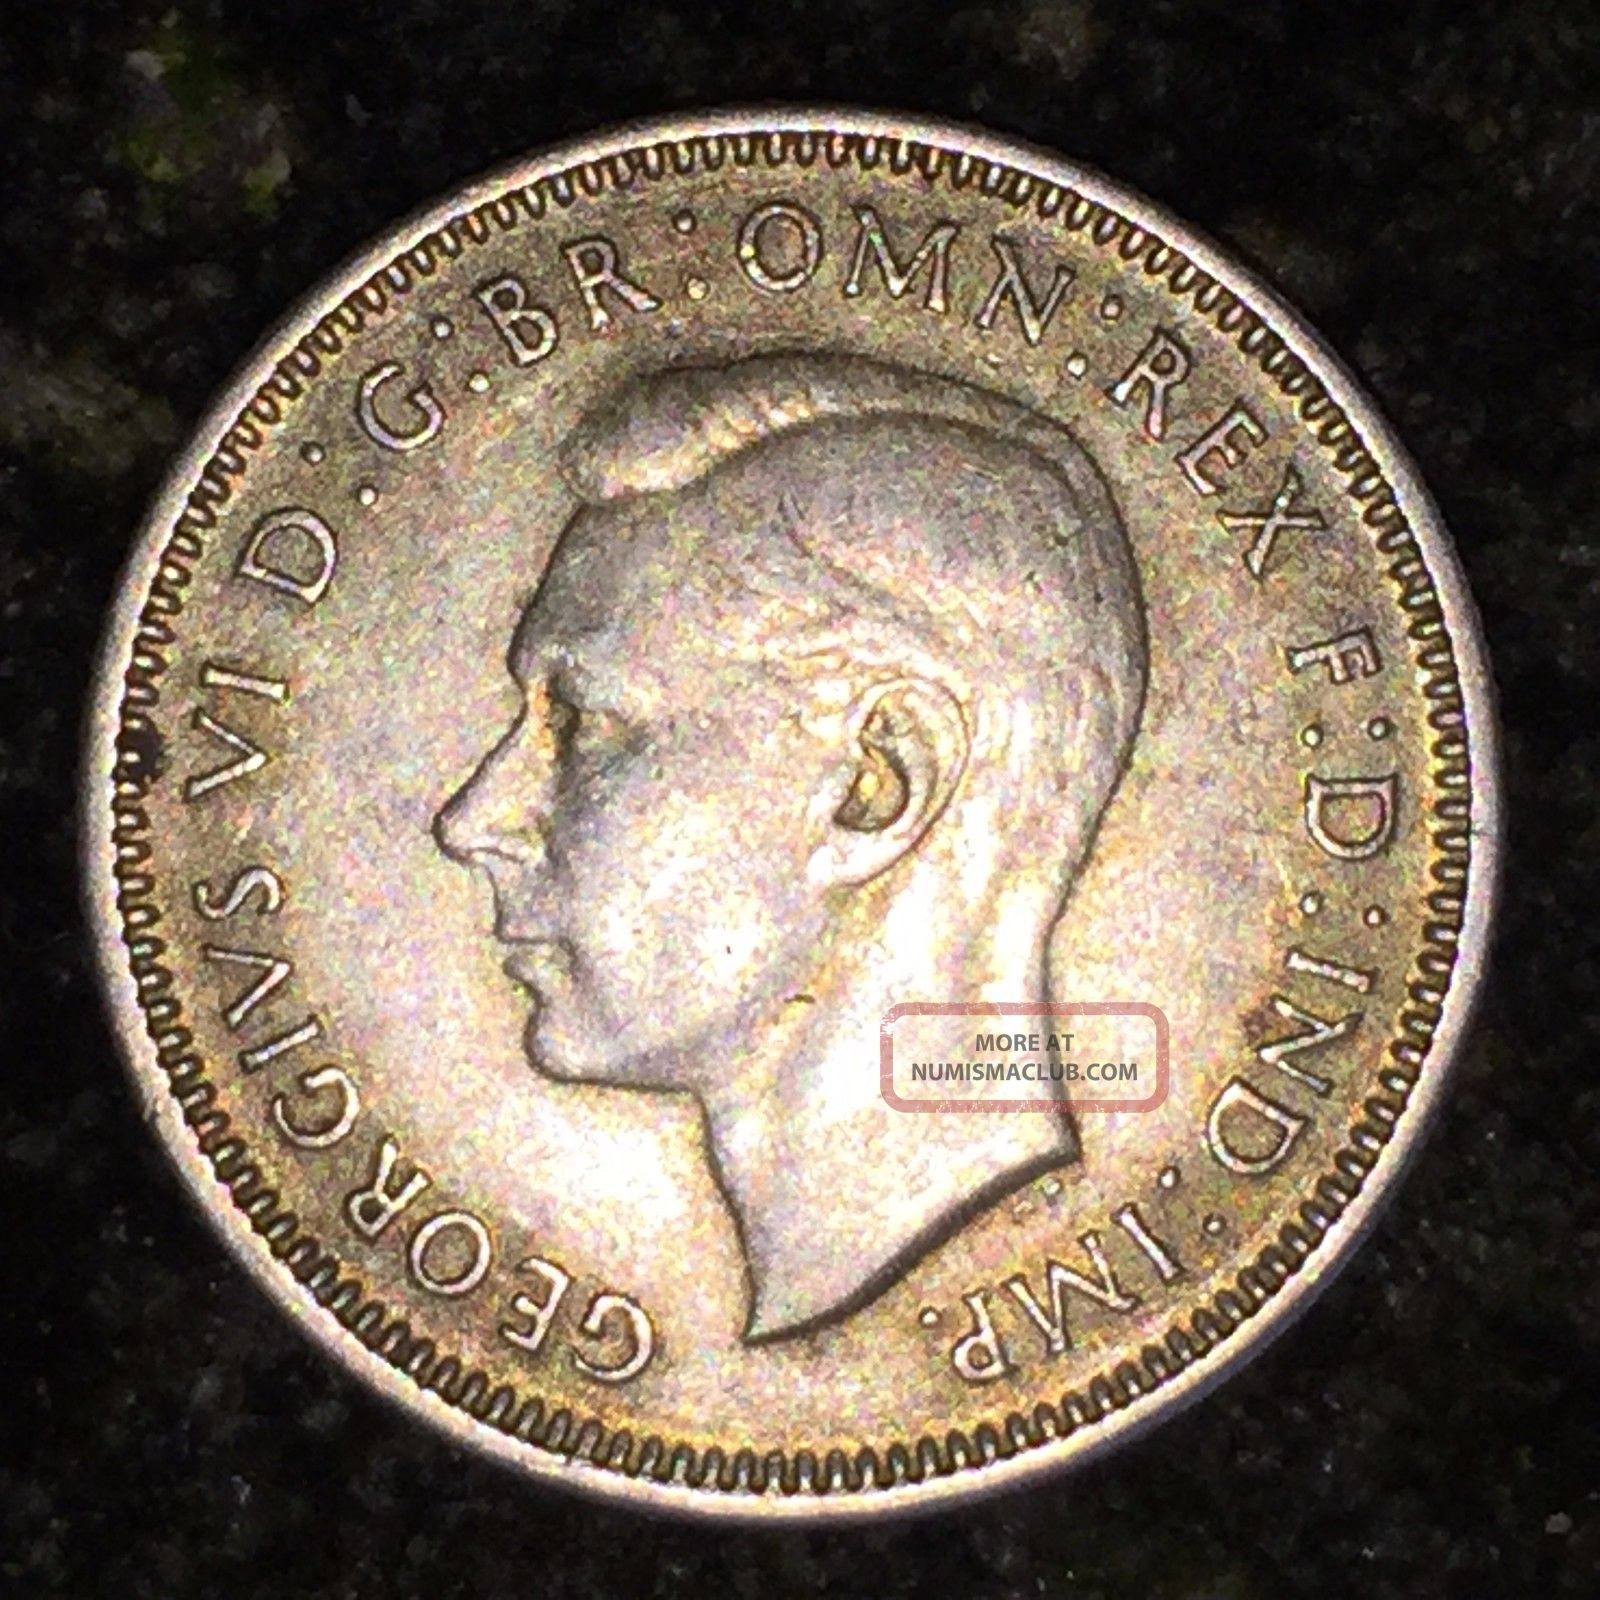 Australia 1 Shilling Bob 1943 S,  San Francisco - Vf,  Silver Pre-Decimal photo